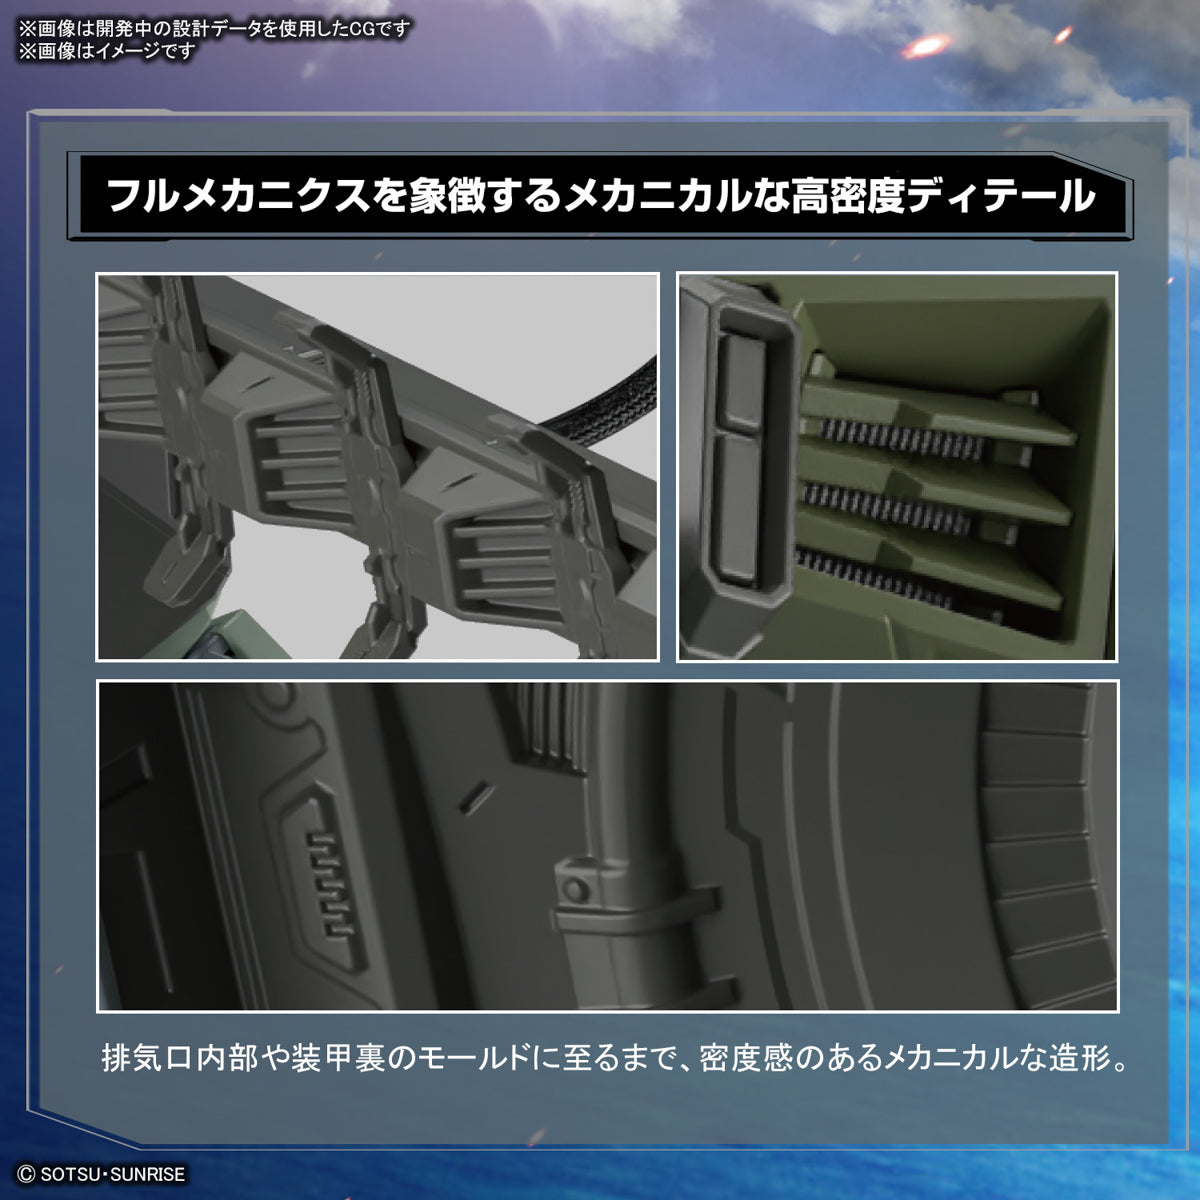 FM - GAT-X252 Forbidden Gundam